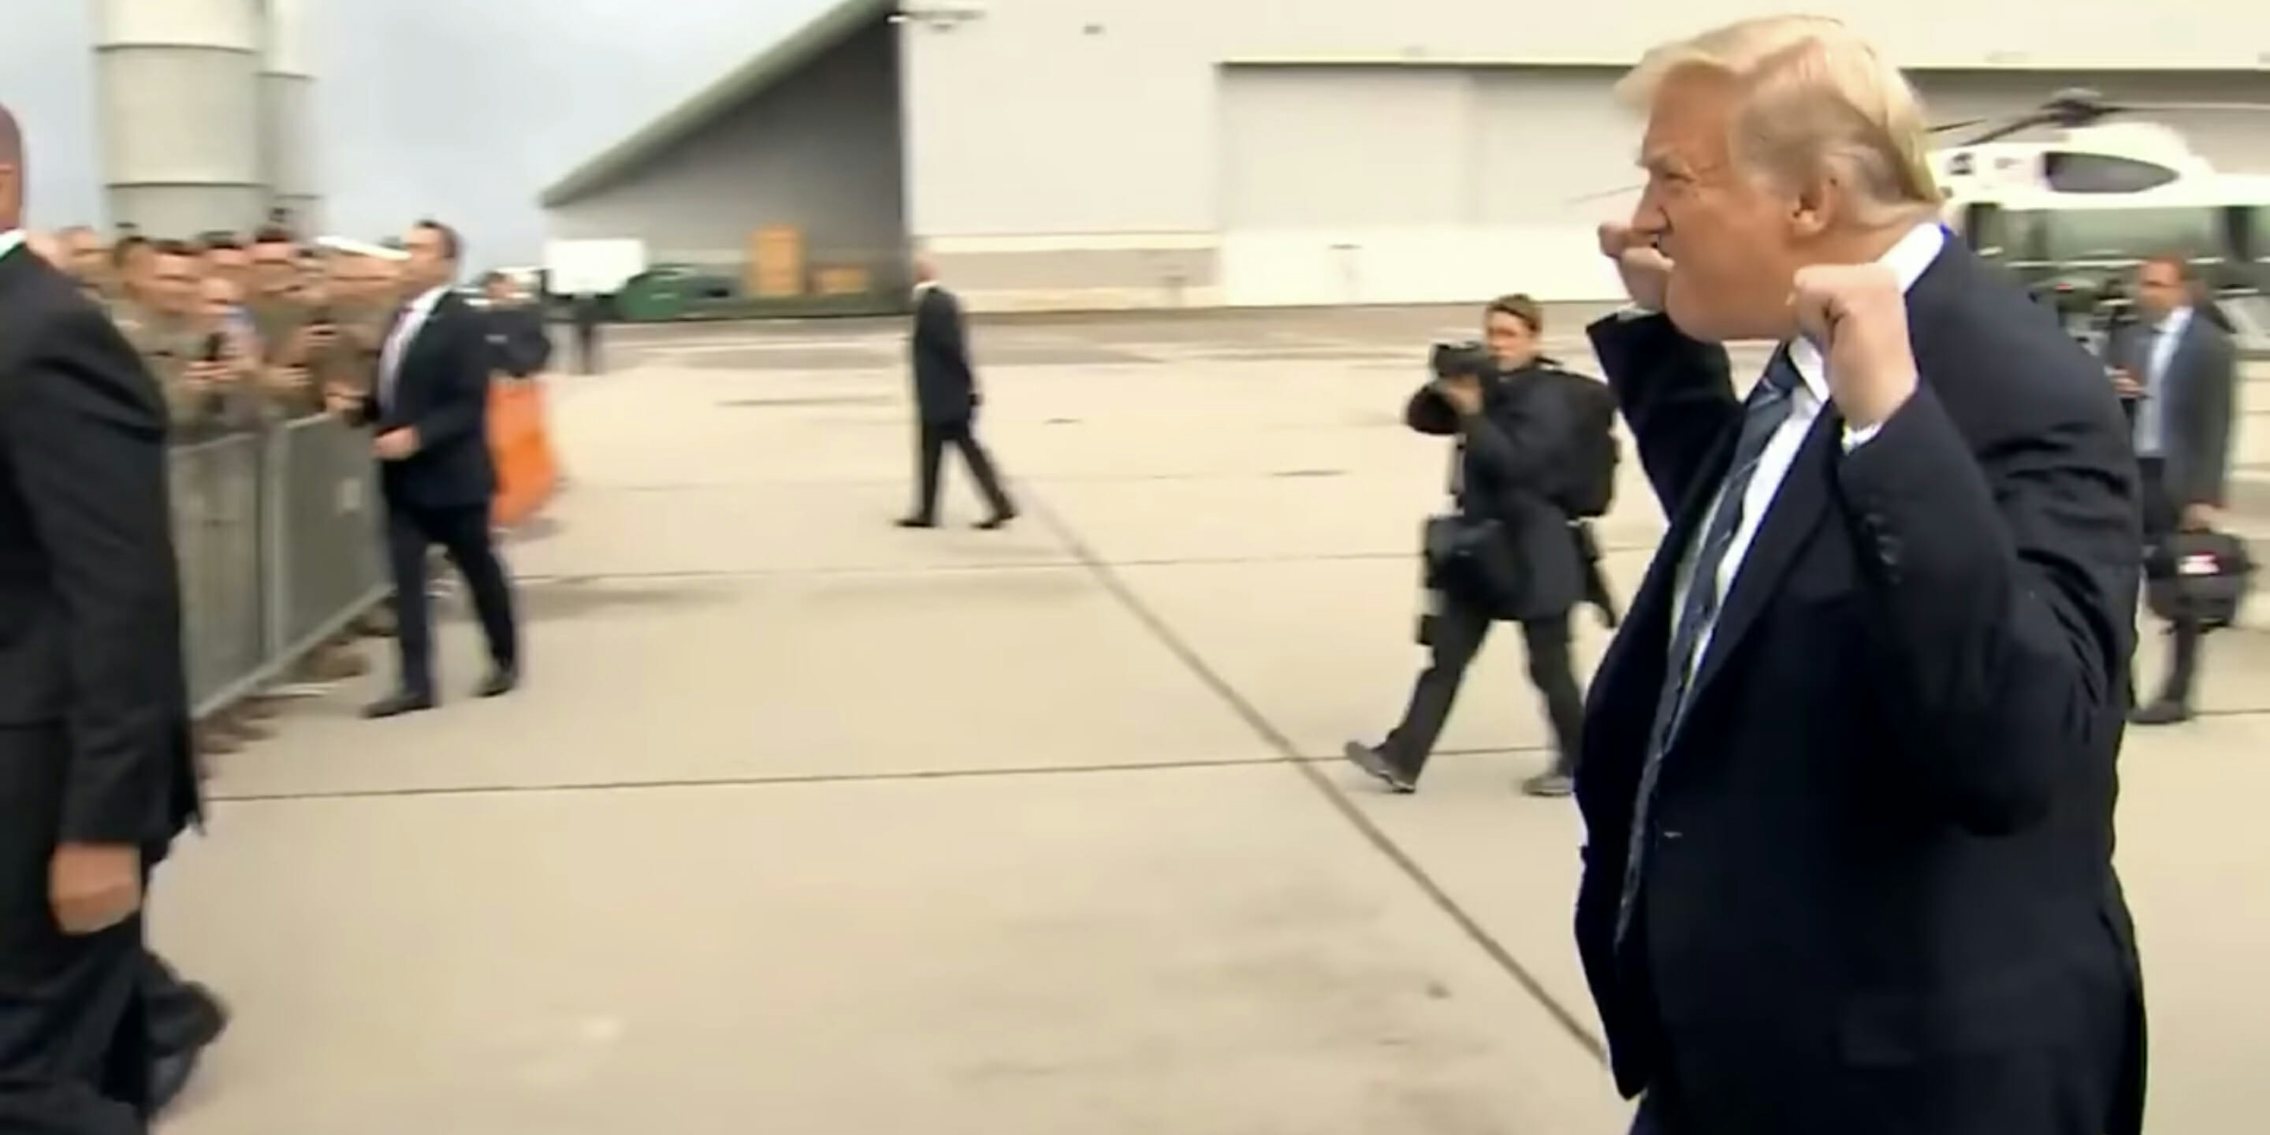 Trump fist pumps as he walks toward the crowd at a 9/11 memorial service.